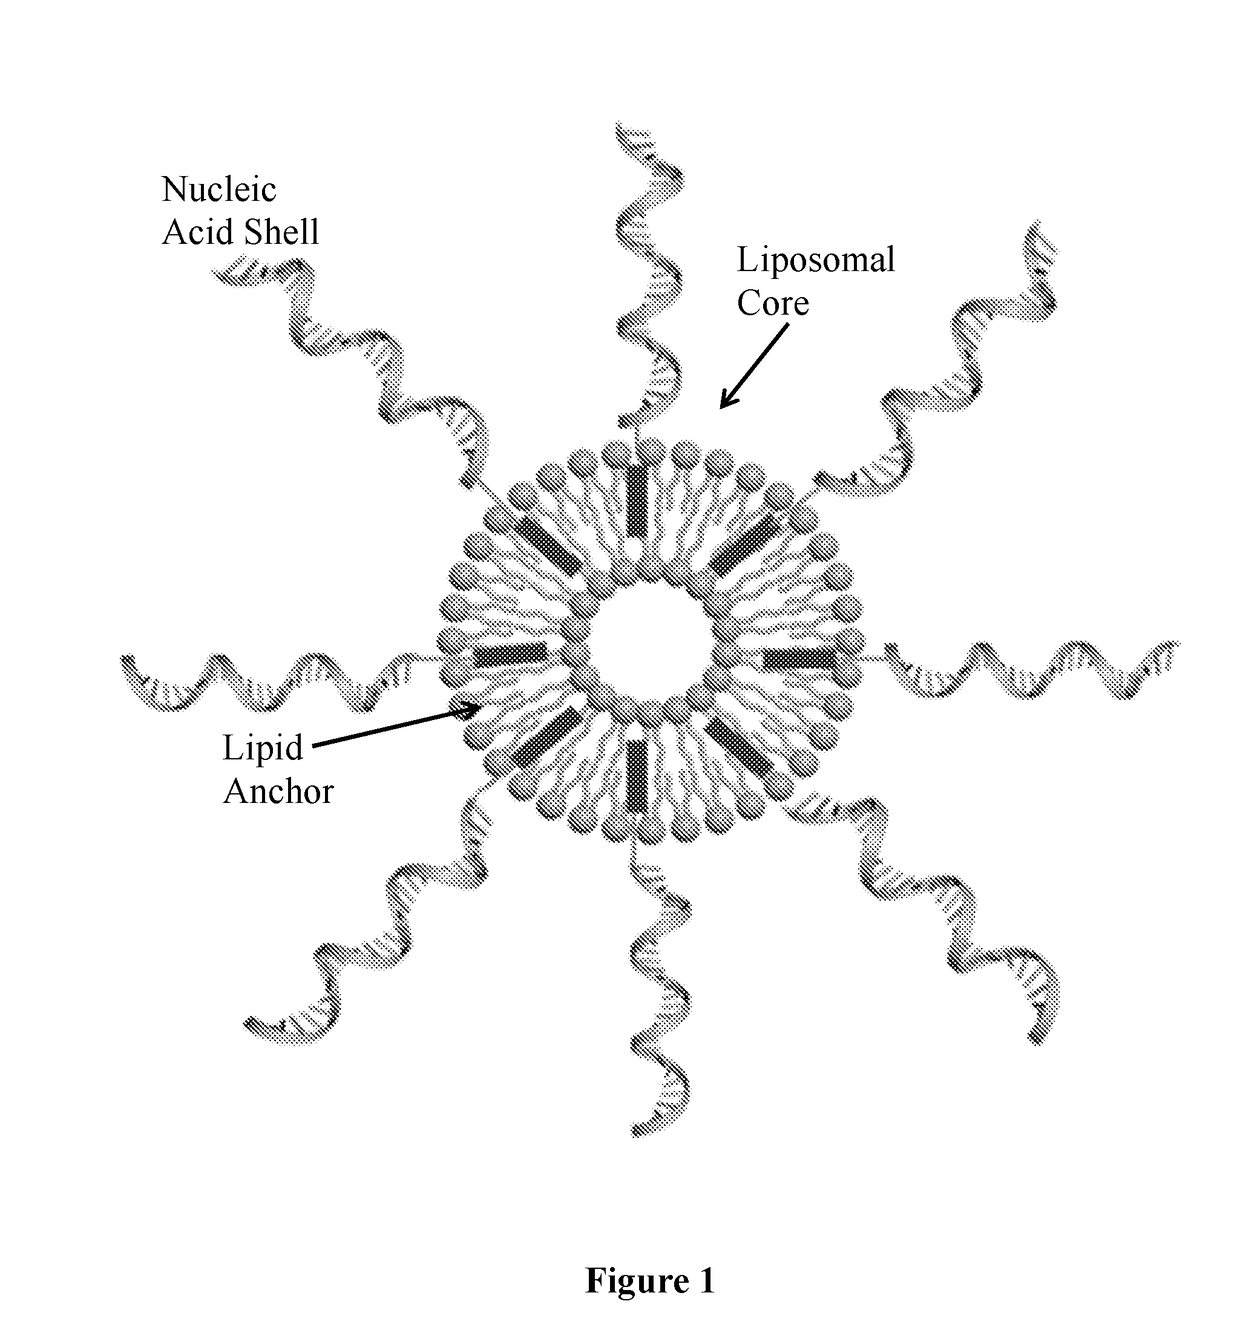 Immuno-regulatory lipid containing spherical nucleic acids